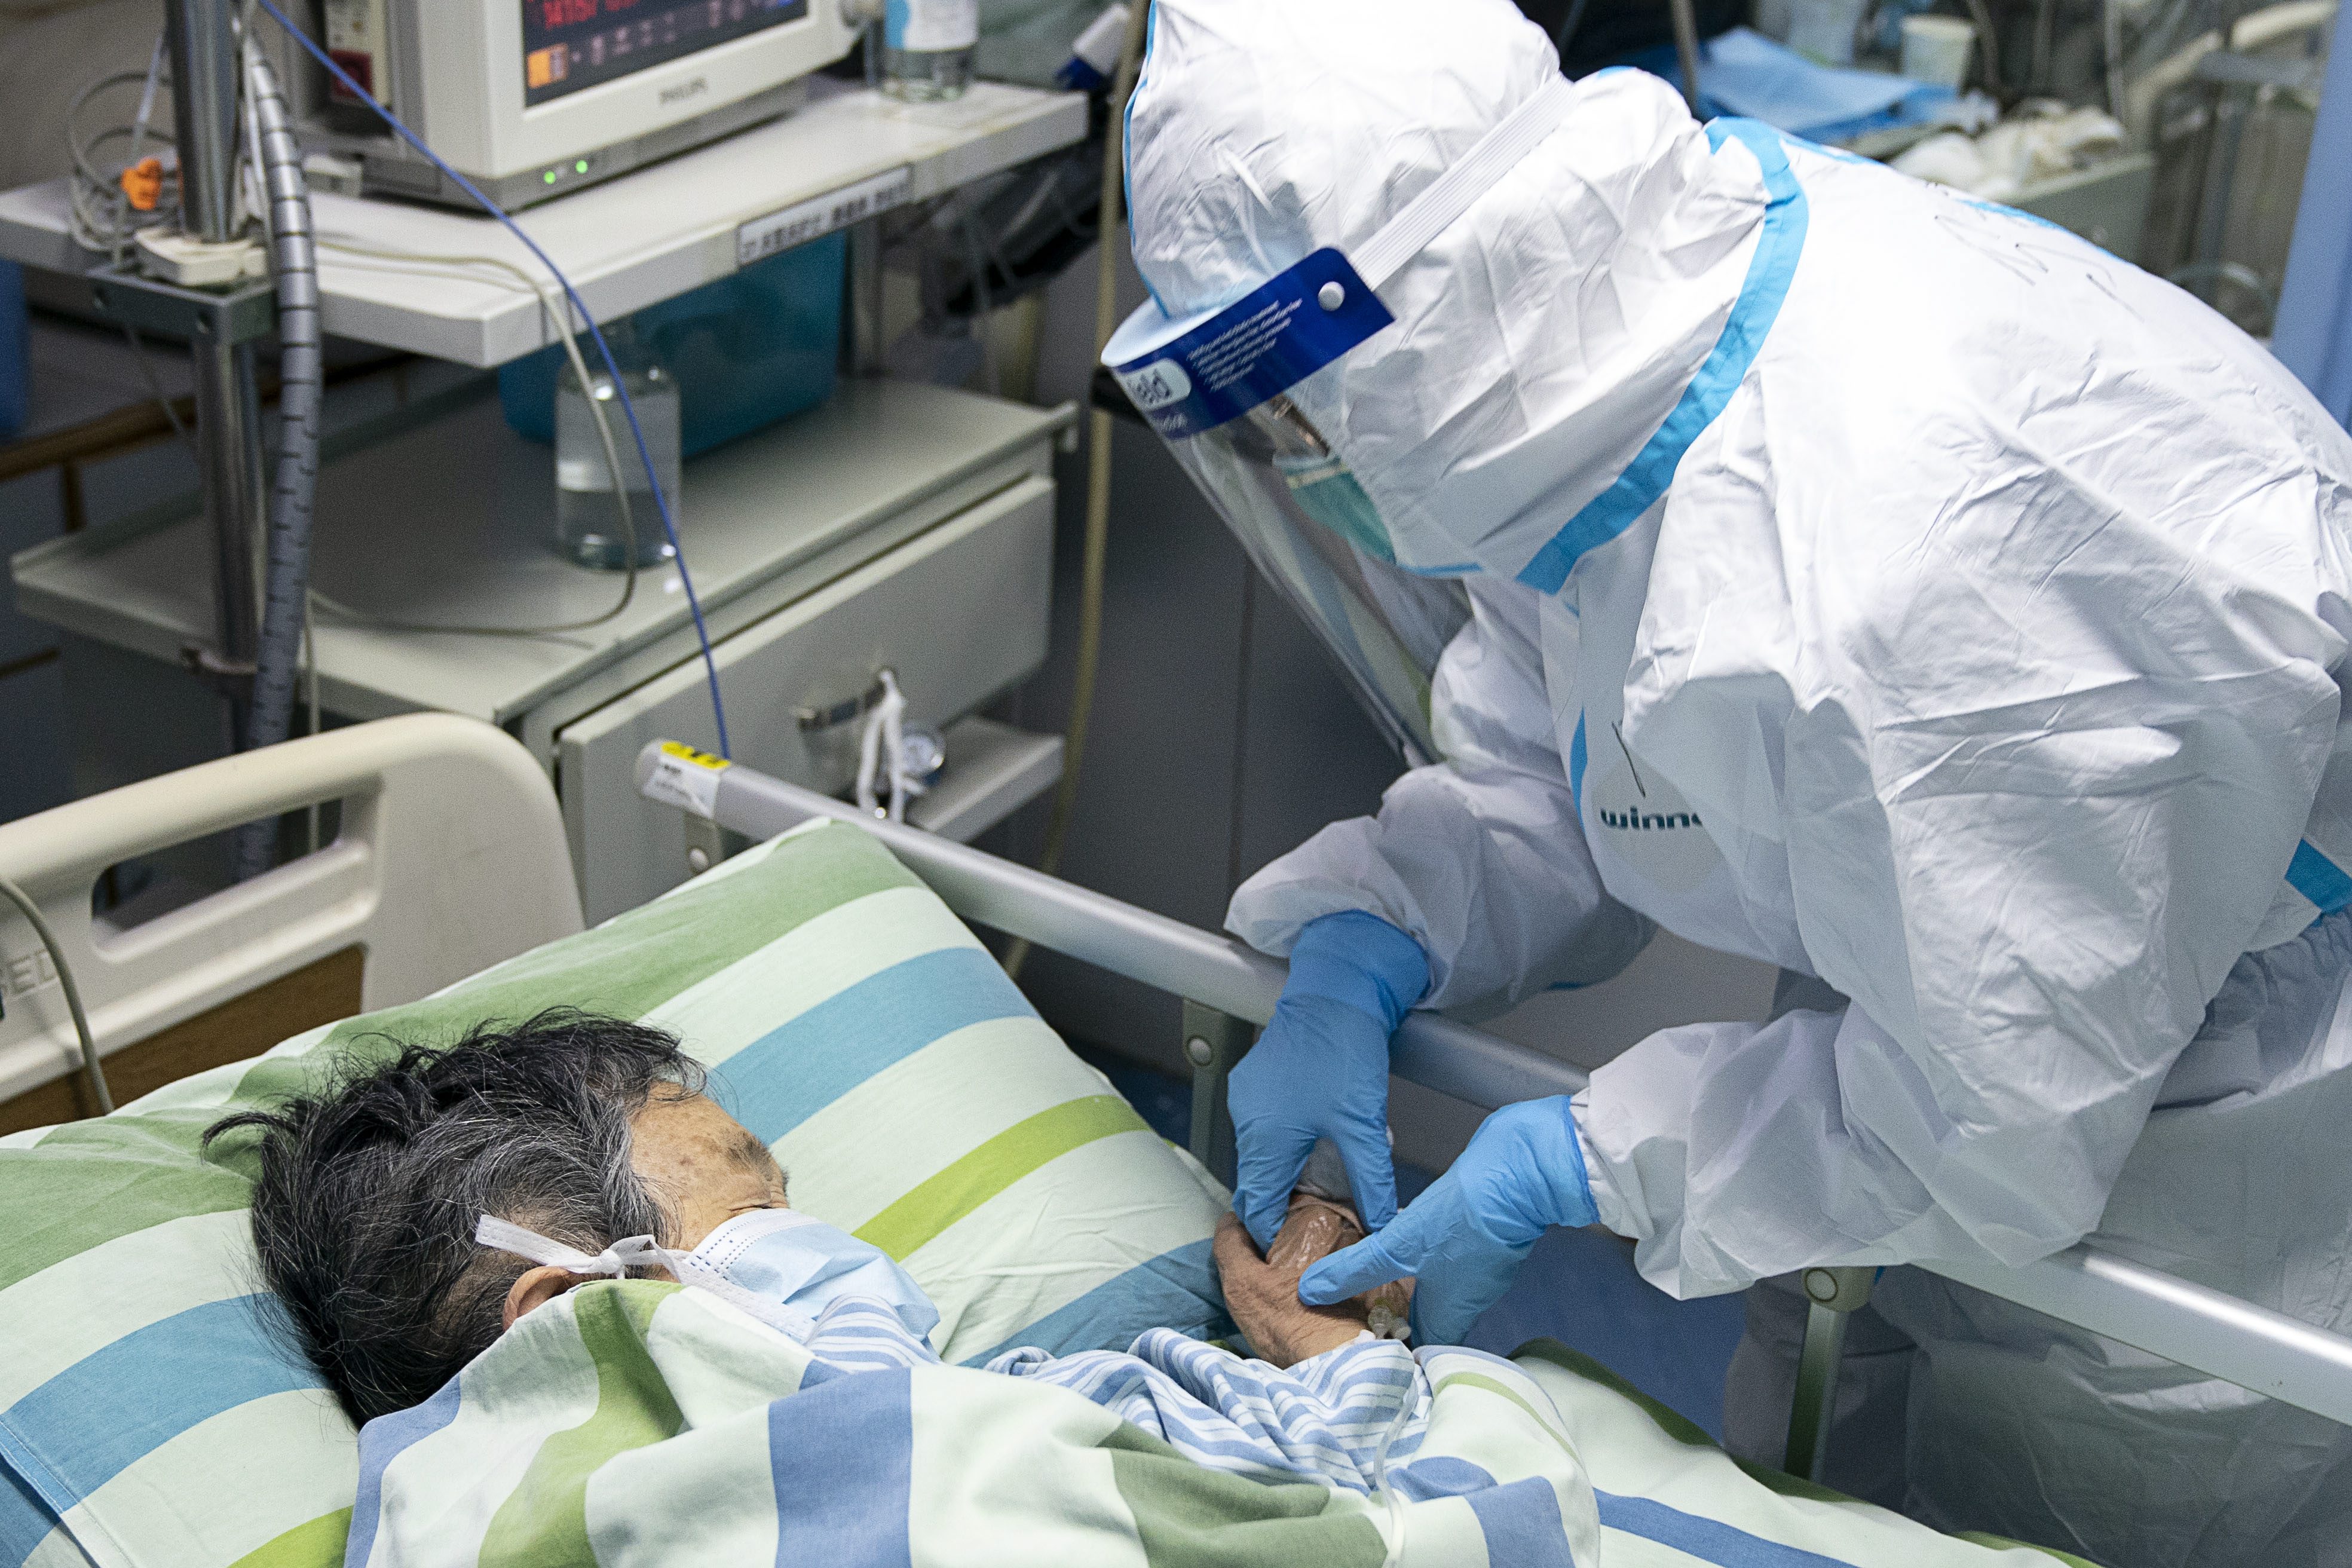 41 dead from China coronavirus, 1300 cases